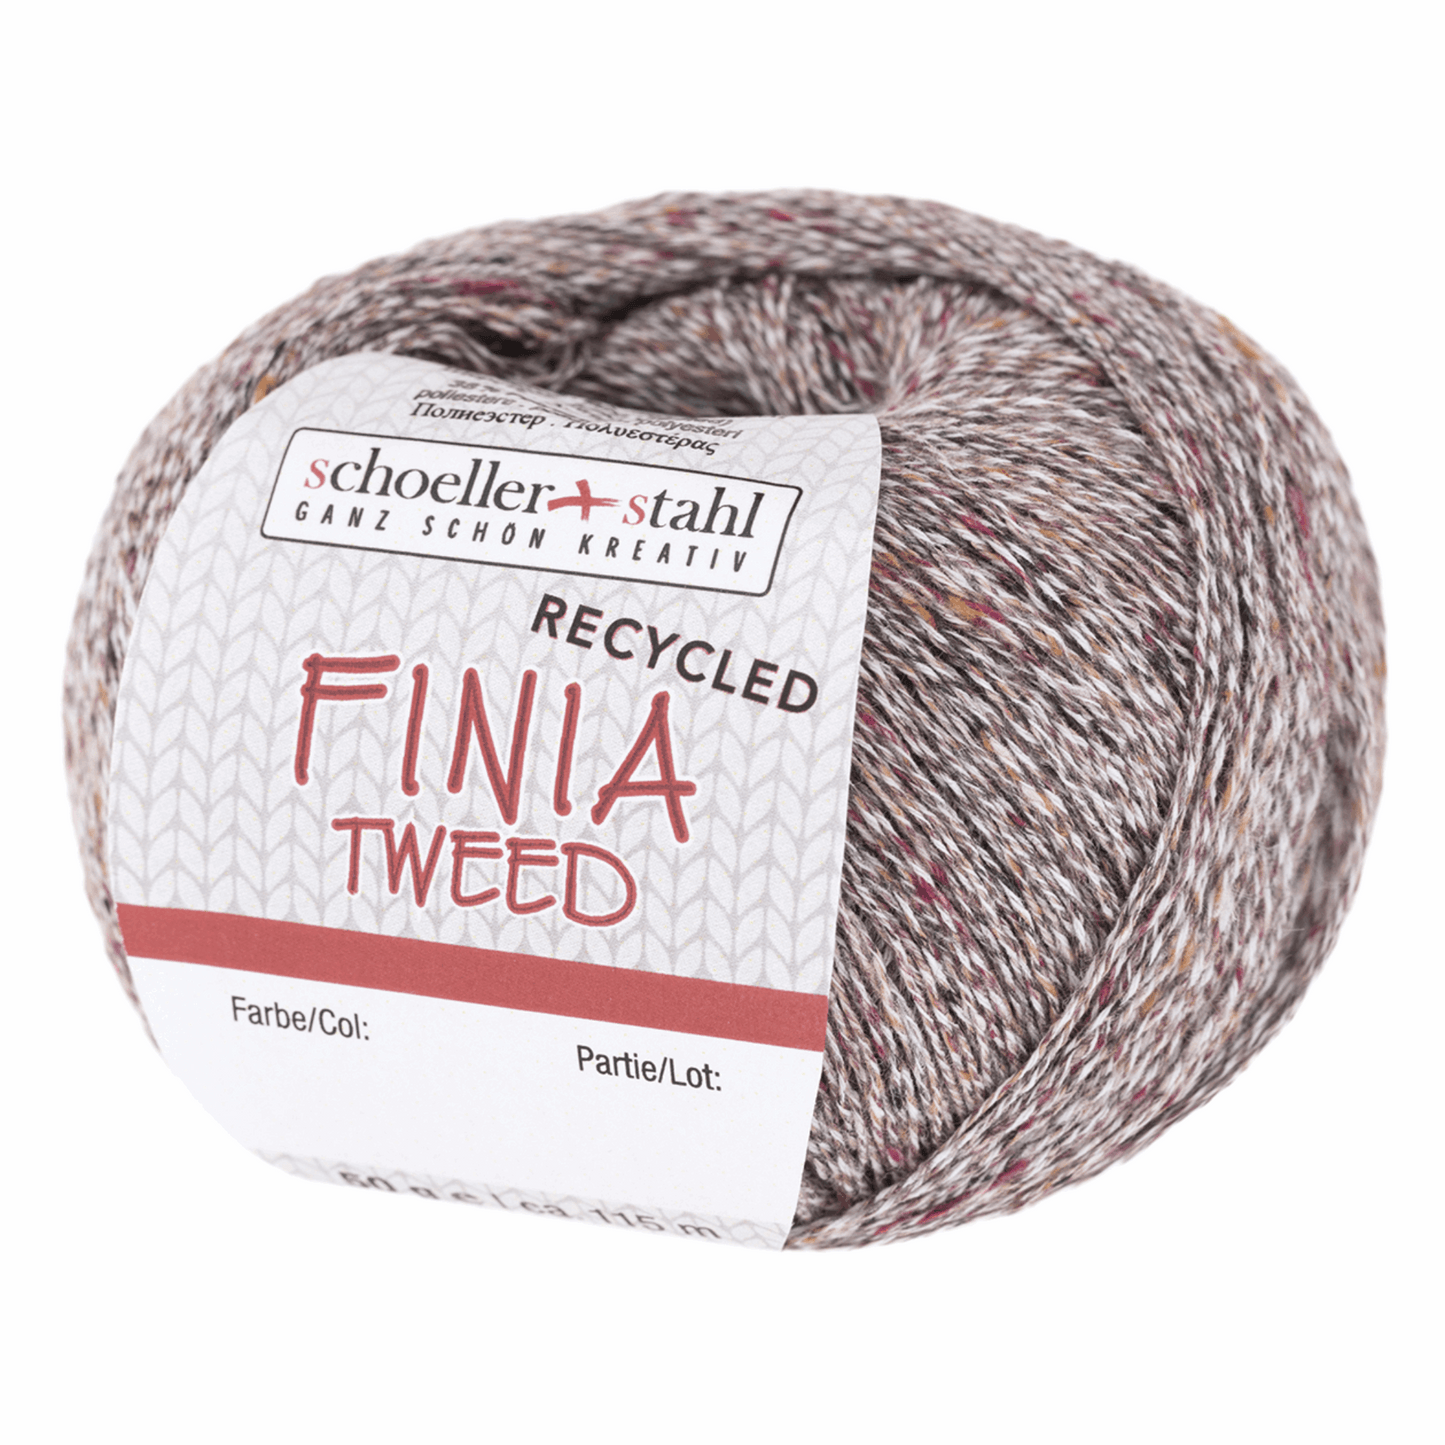 Finia tweed 50g recycled, 90282, Farbe 6, quarz